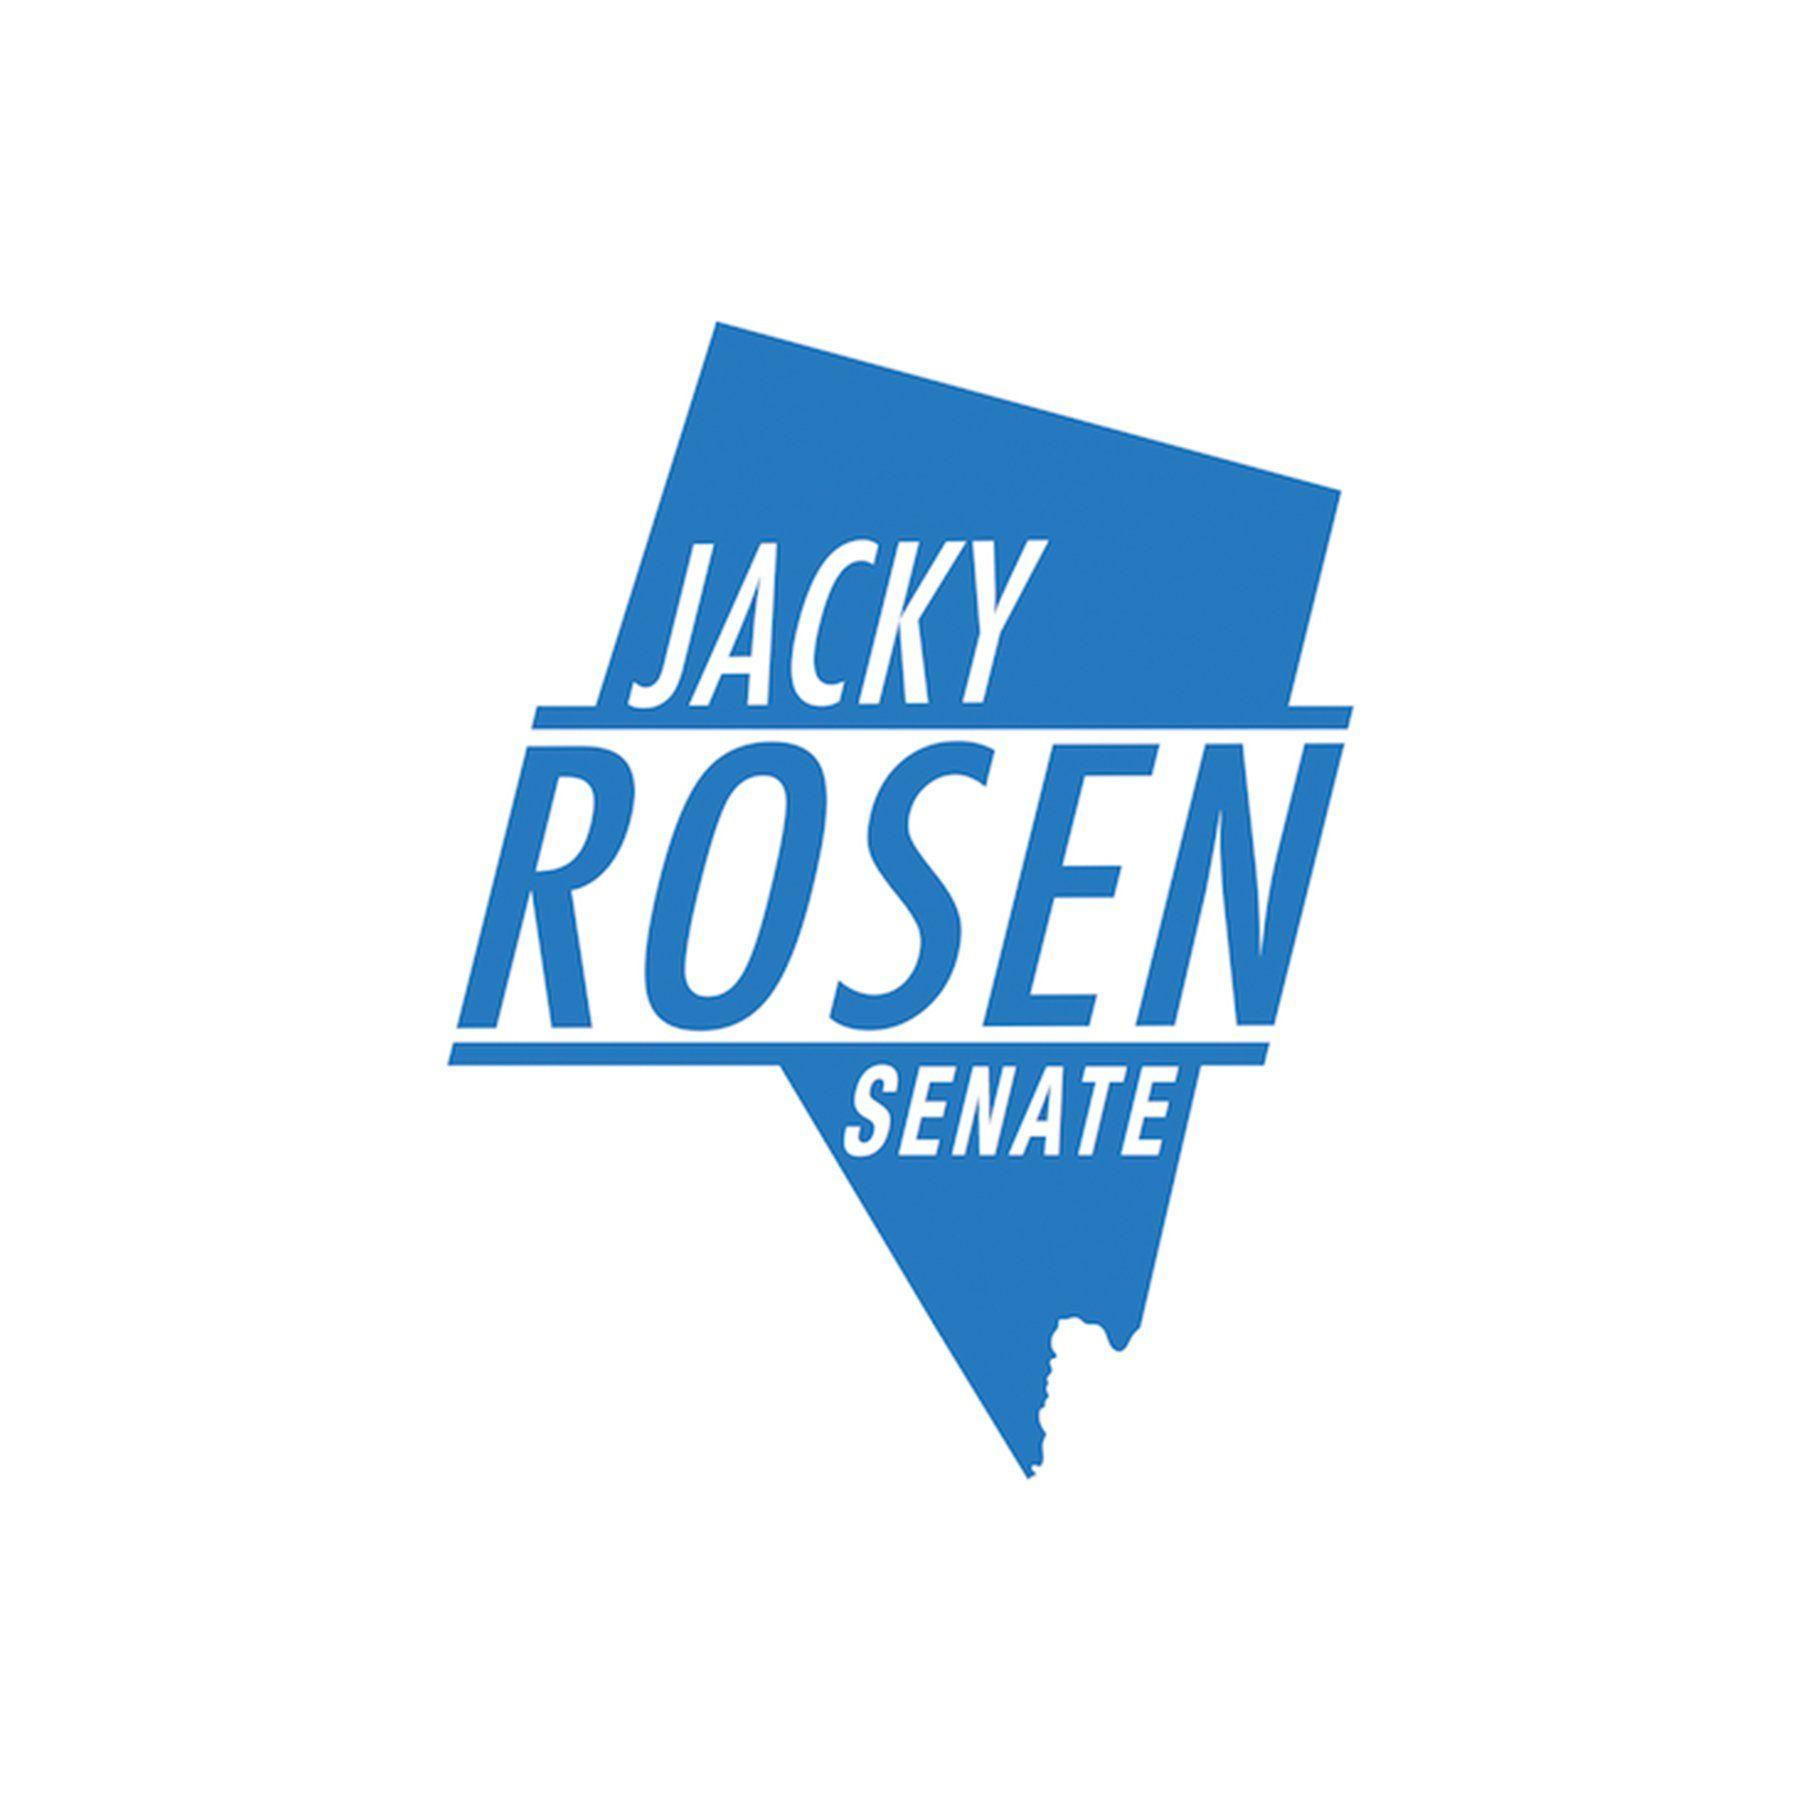 Rosen Logo - Campaign logo for Jacky Rosen. Campaign Communications